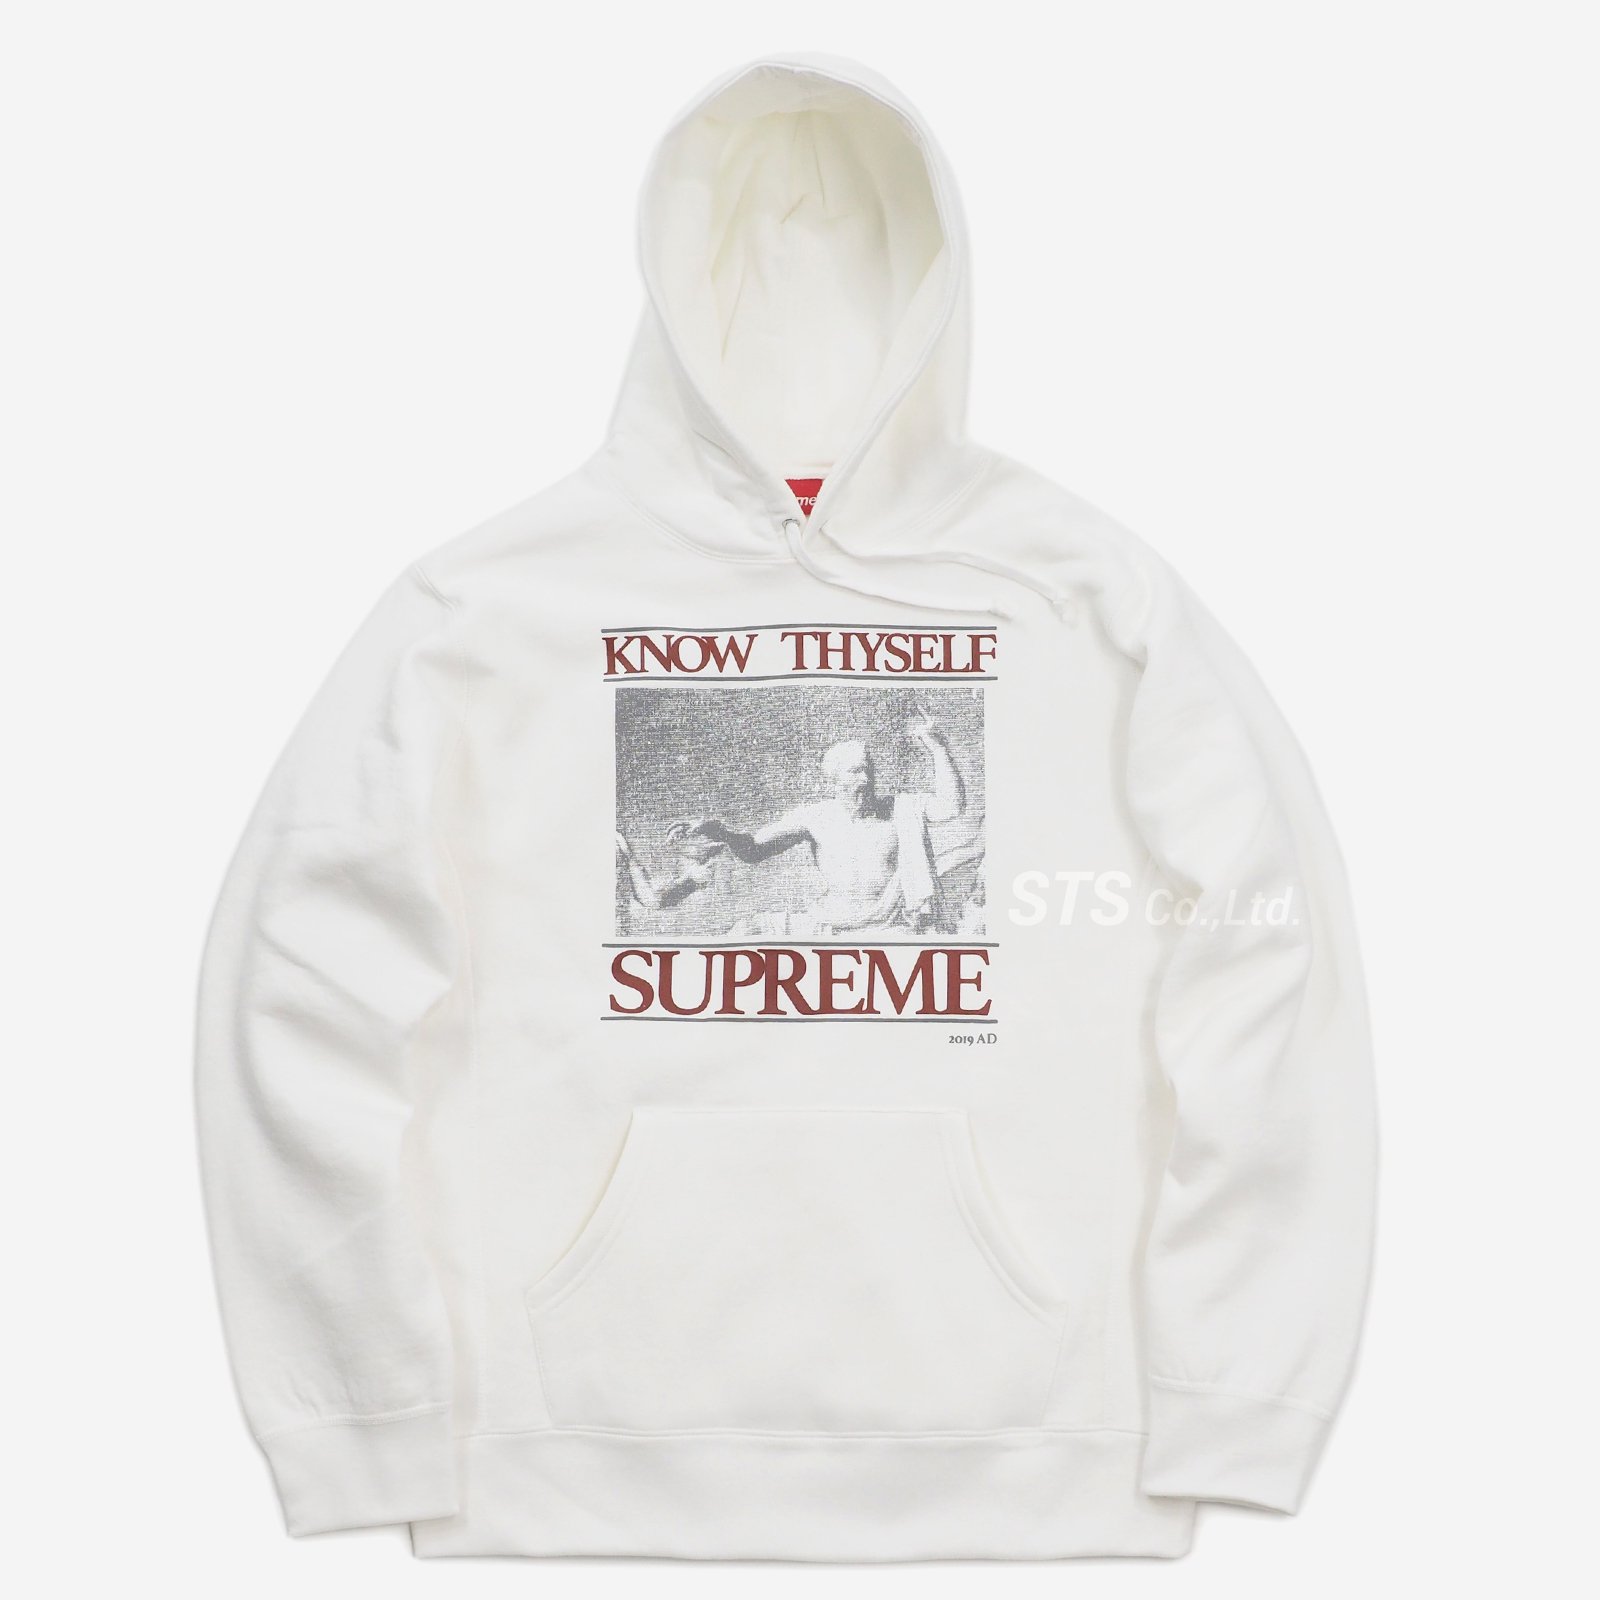 Supreme - Know Thyself Hooded Sweatshirt - ParkSIDER